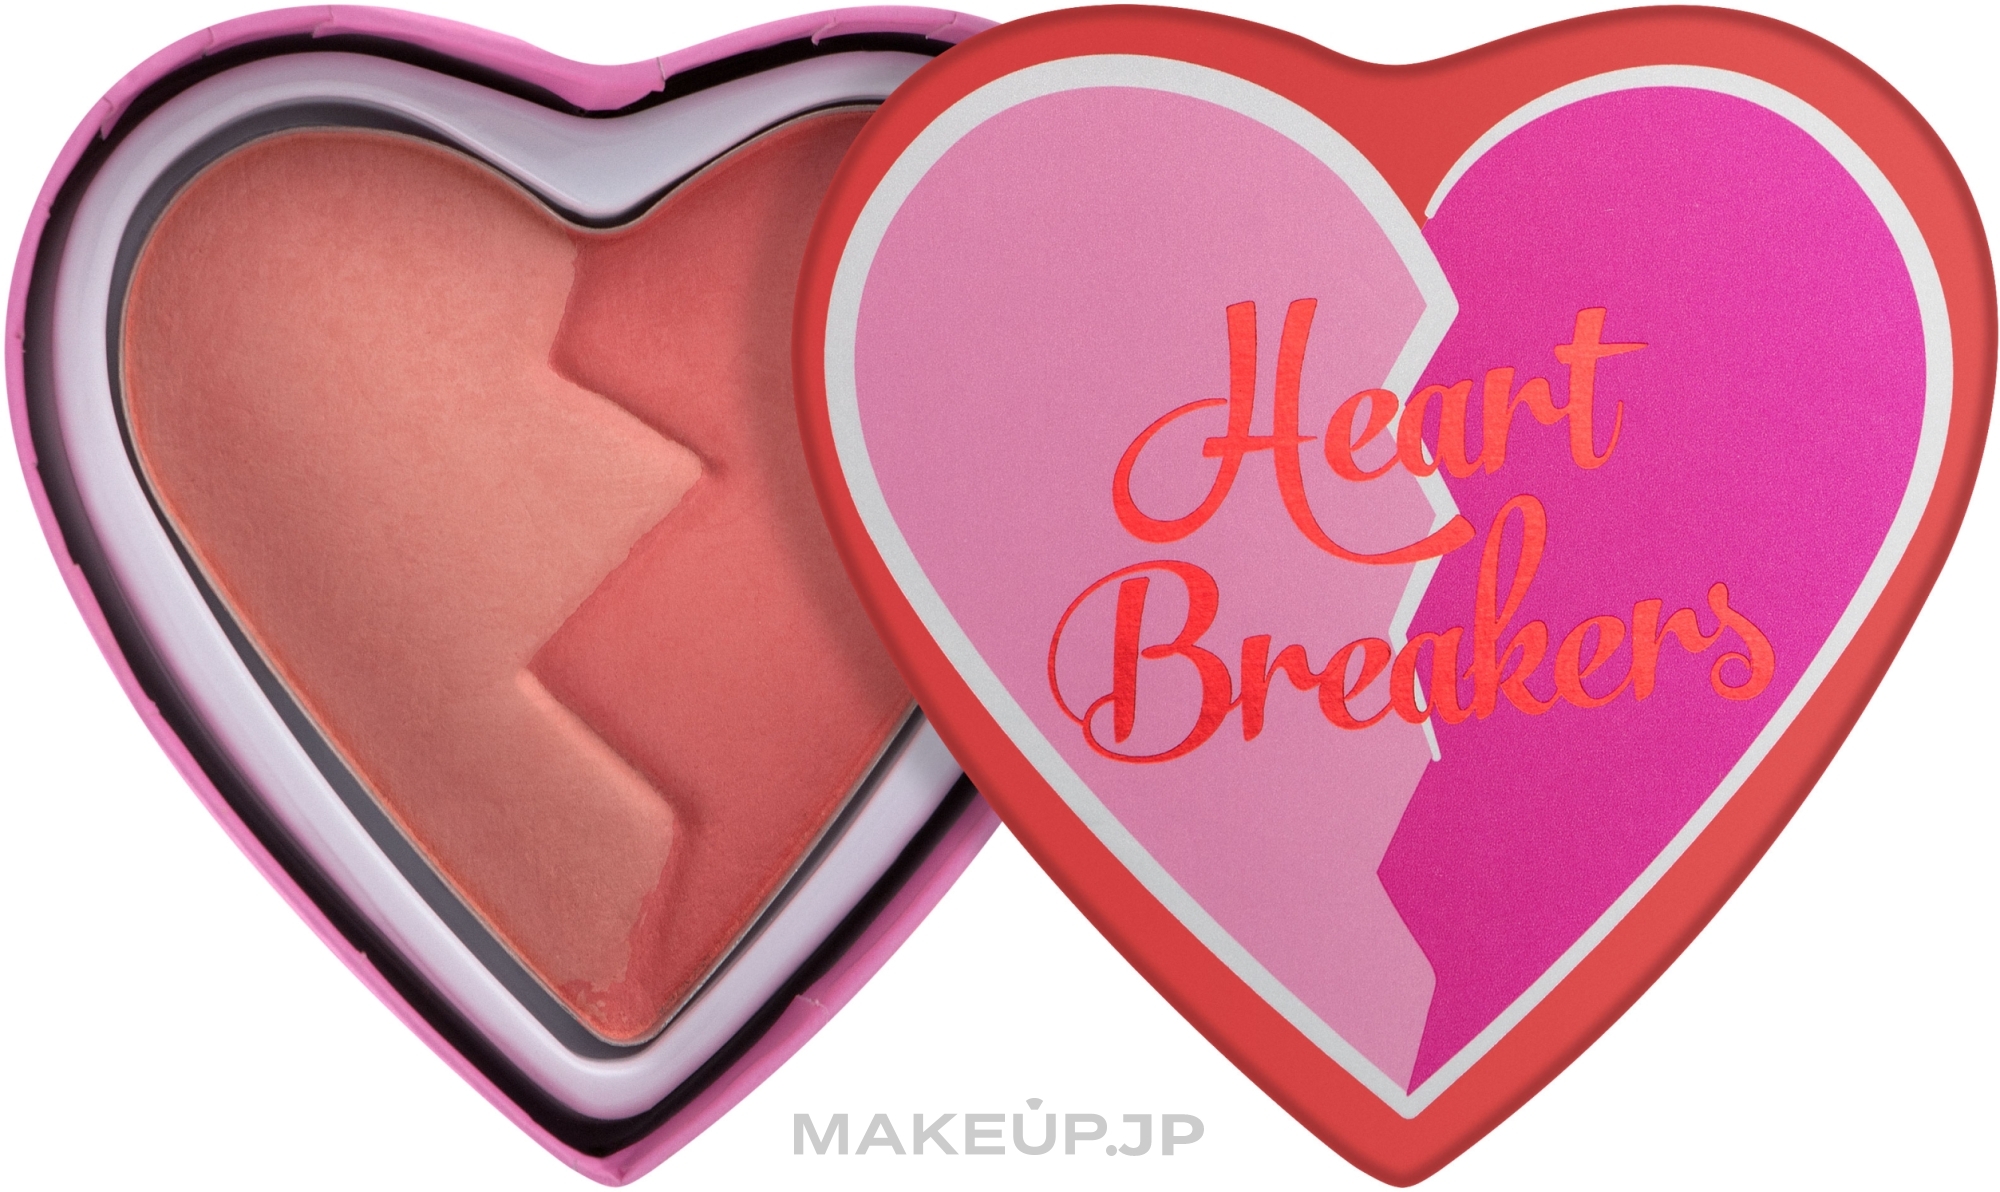 Blush - I Heart Revolution Heartbreakers Matte Blush — photo Brave